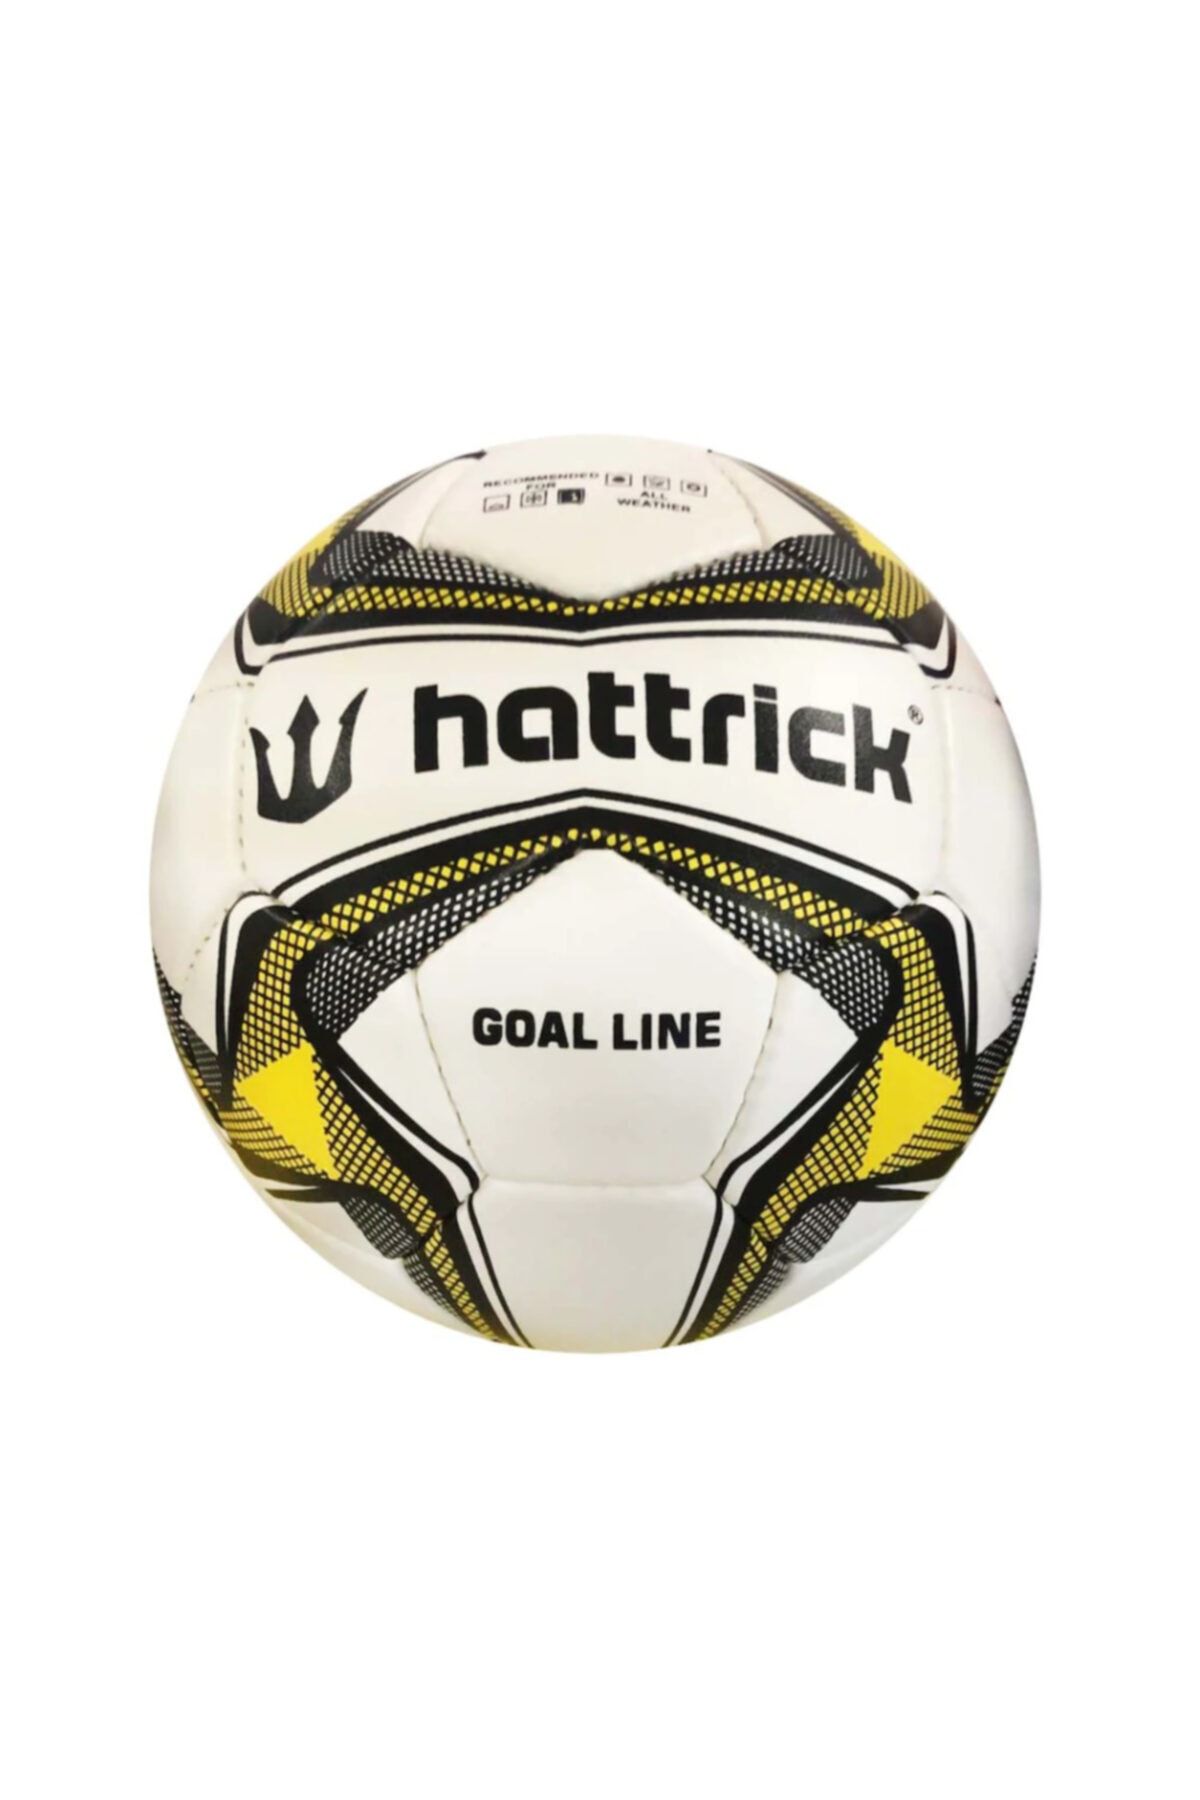 Hattrick Goal Line Sarı Futbol Topu 4 No